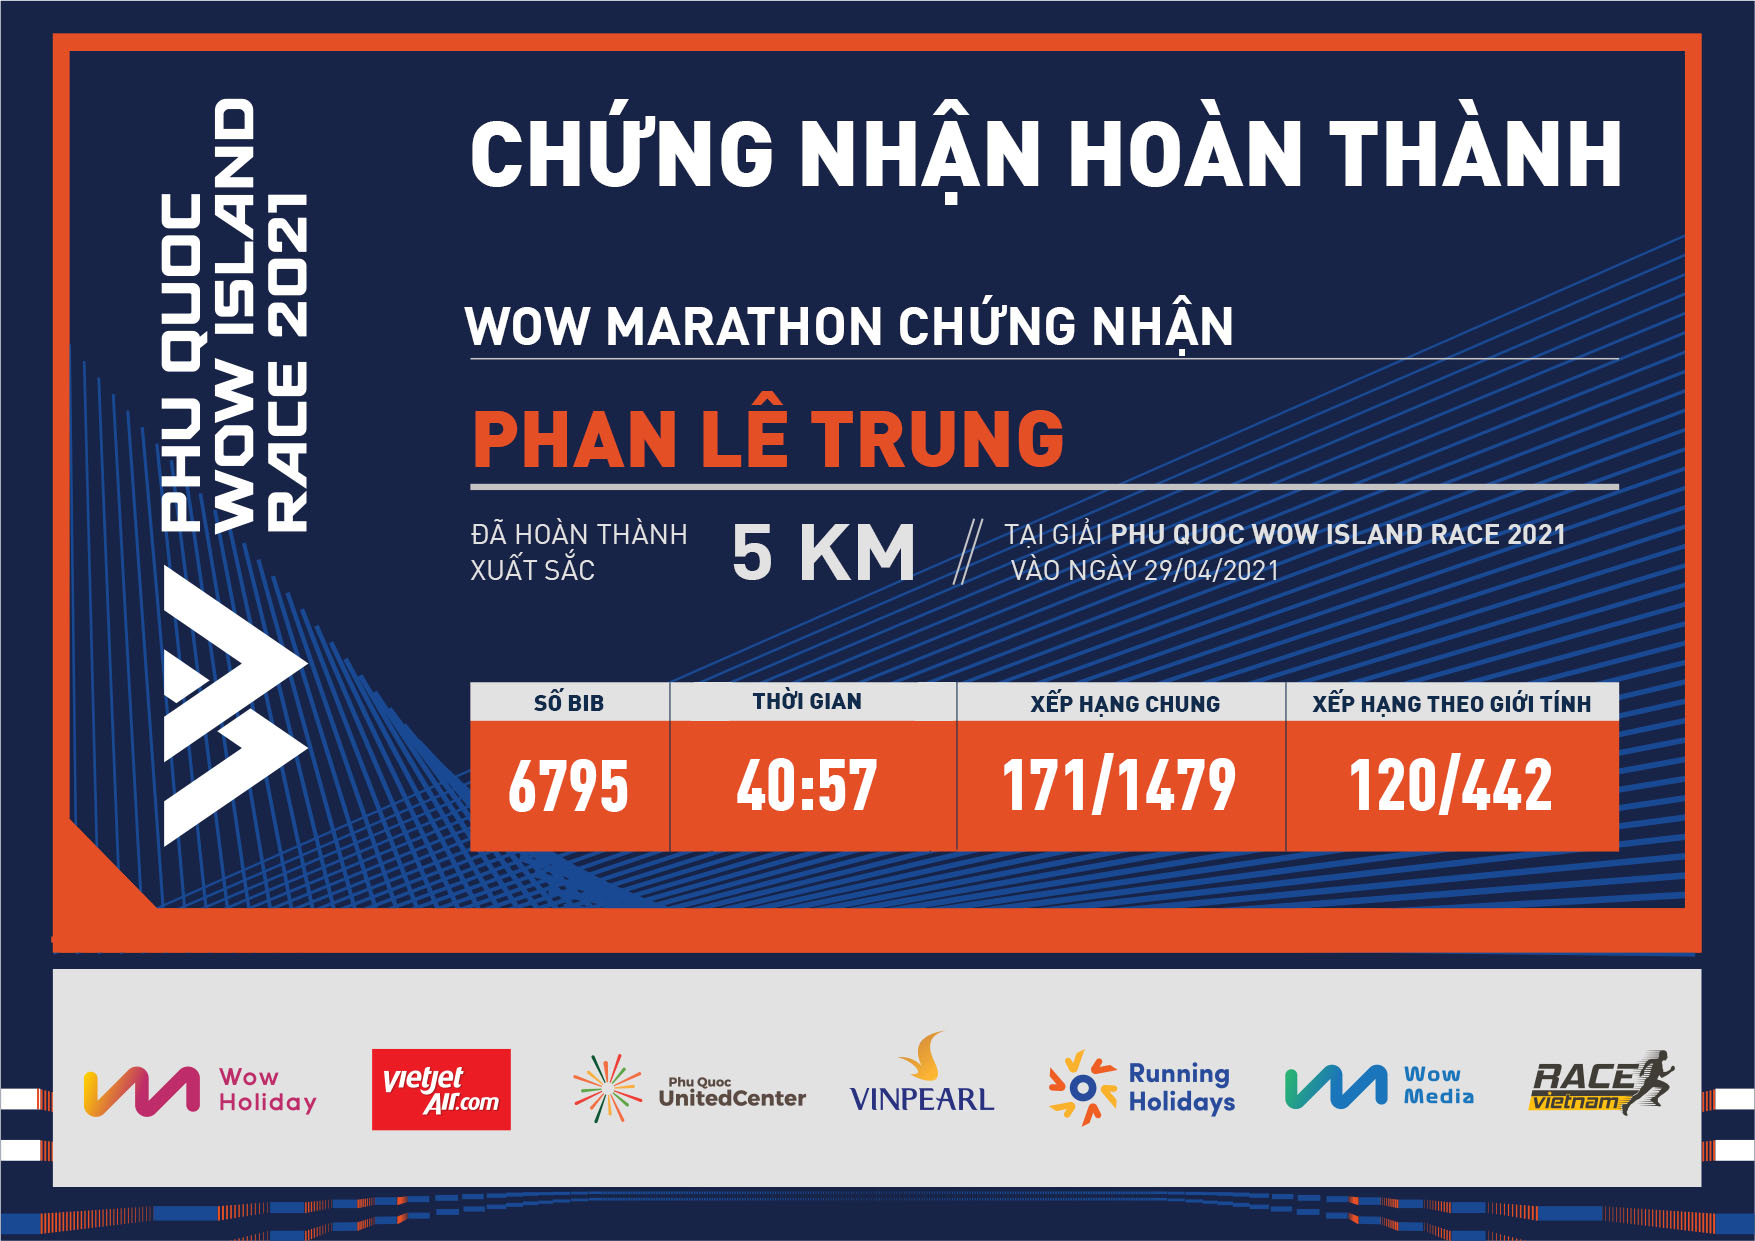 6795 - Phan Lê Trung